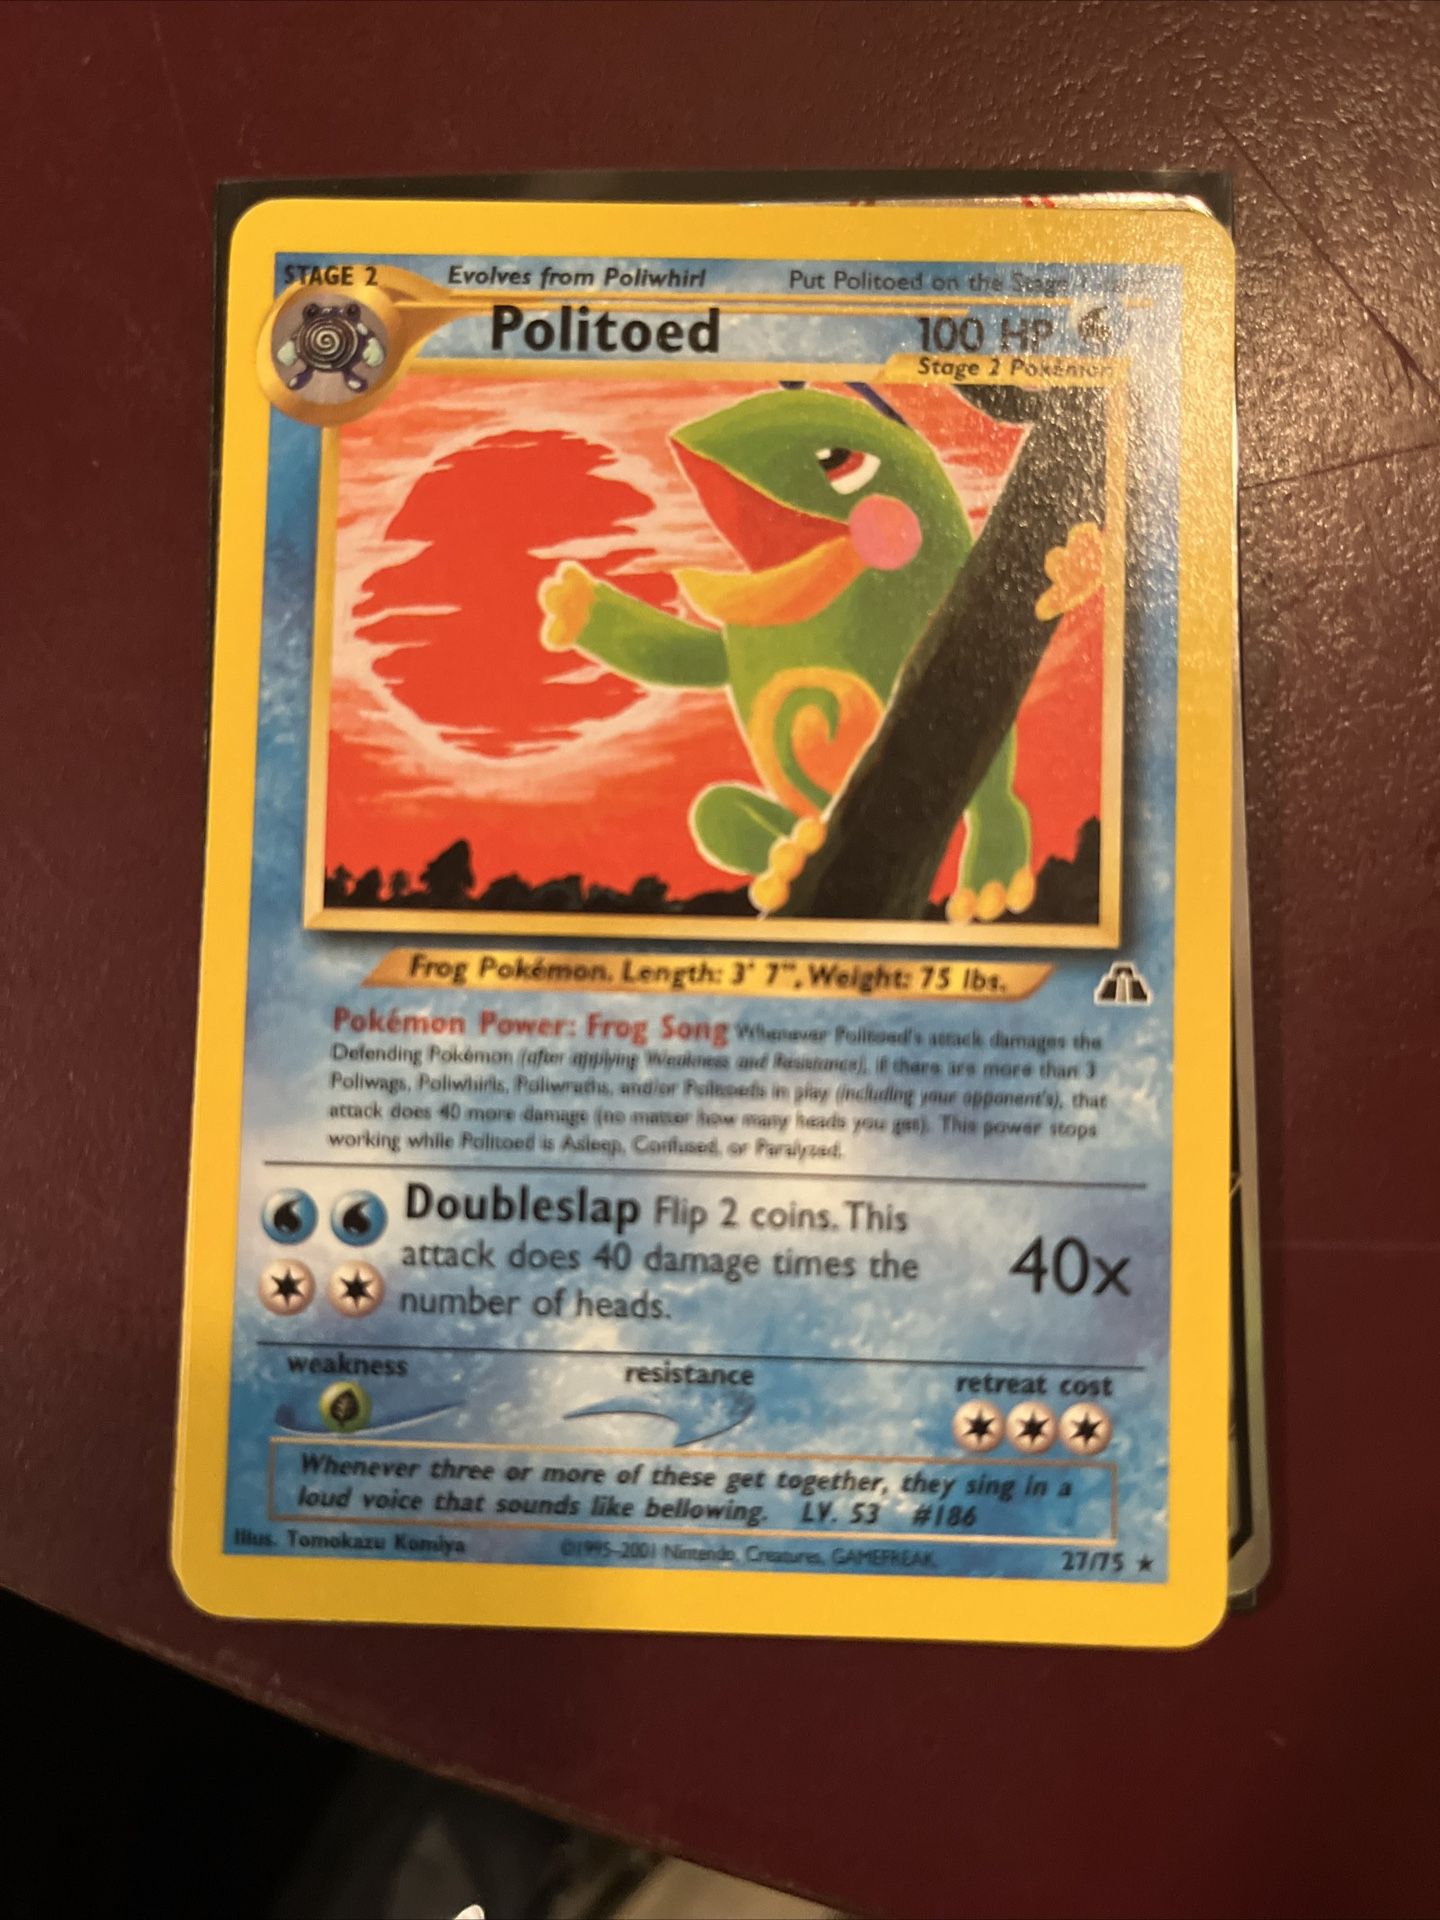 Politoad Pokémon Card